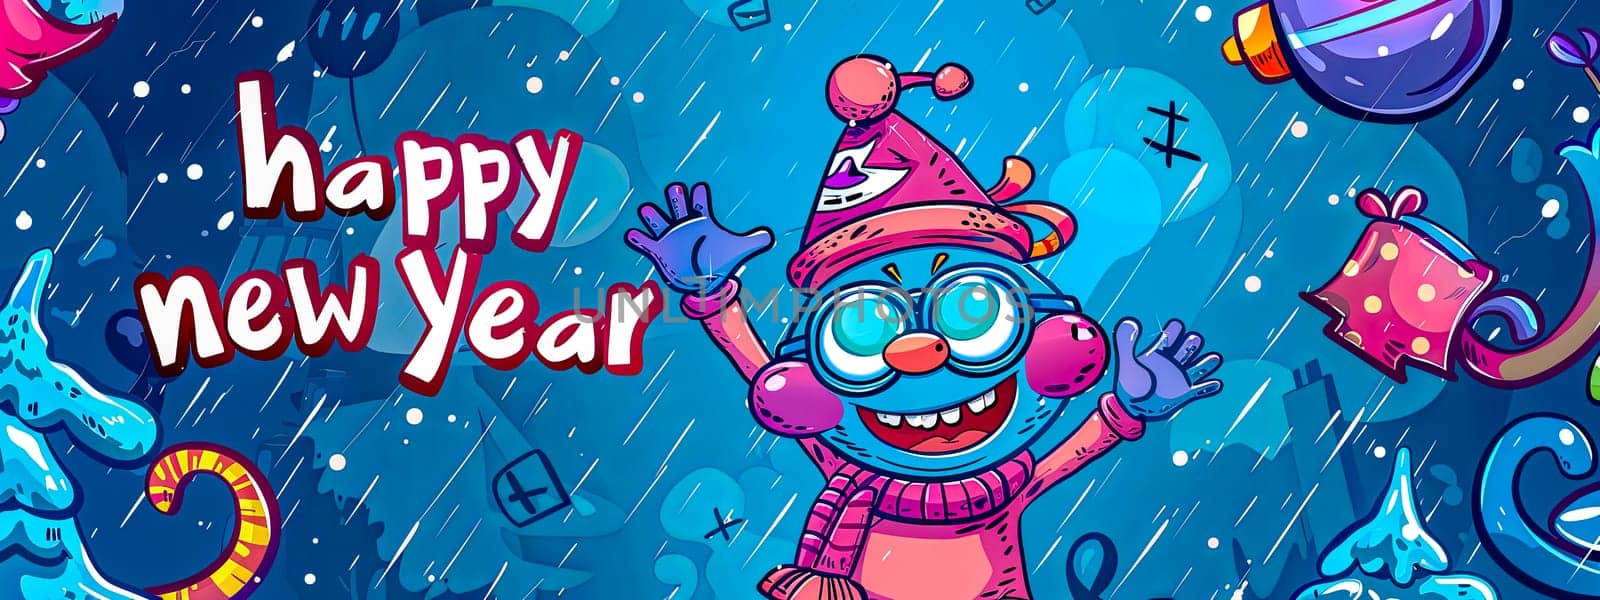 Festive new year celebration cartoon banner by Edophoto